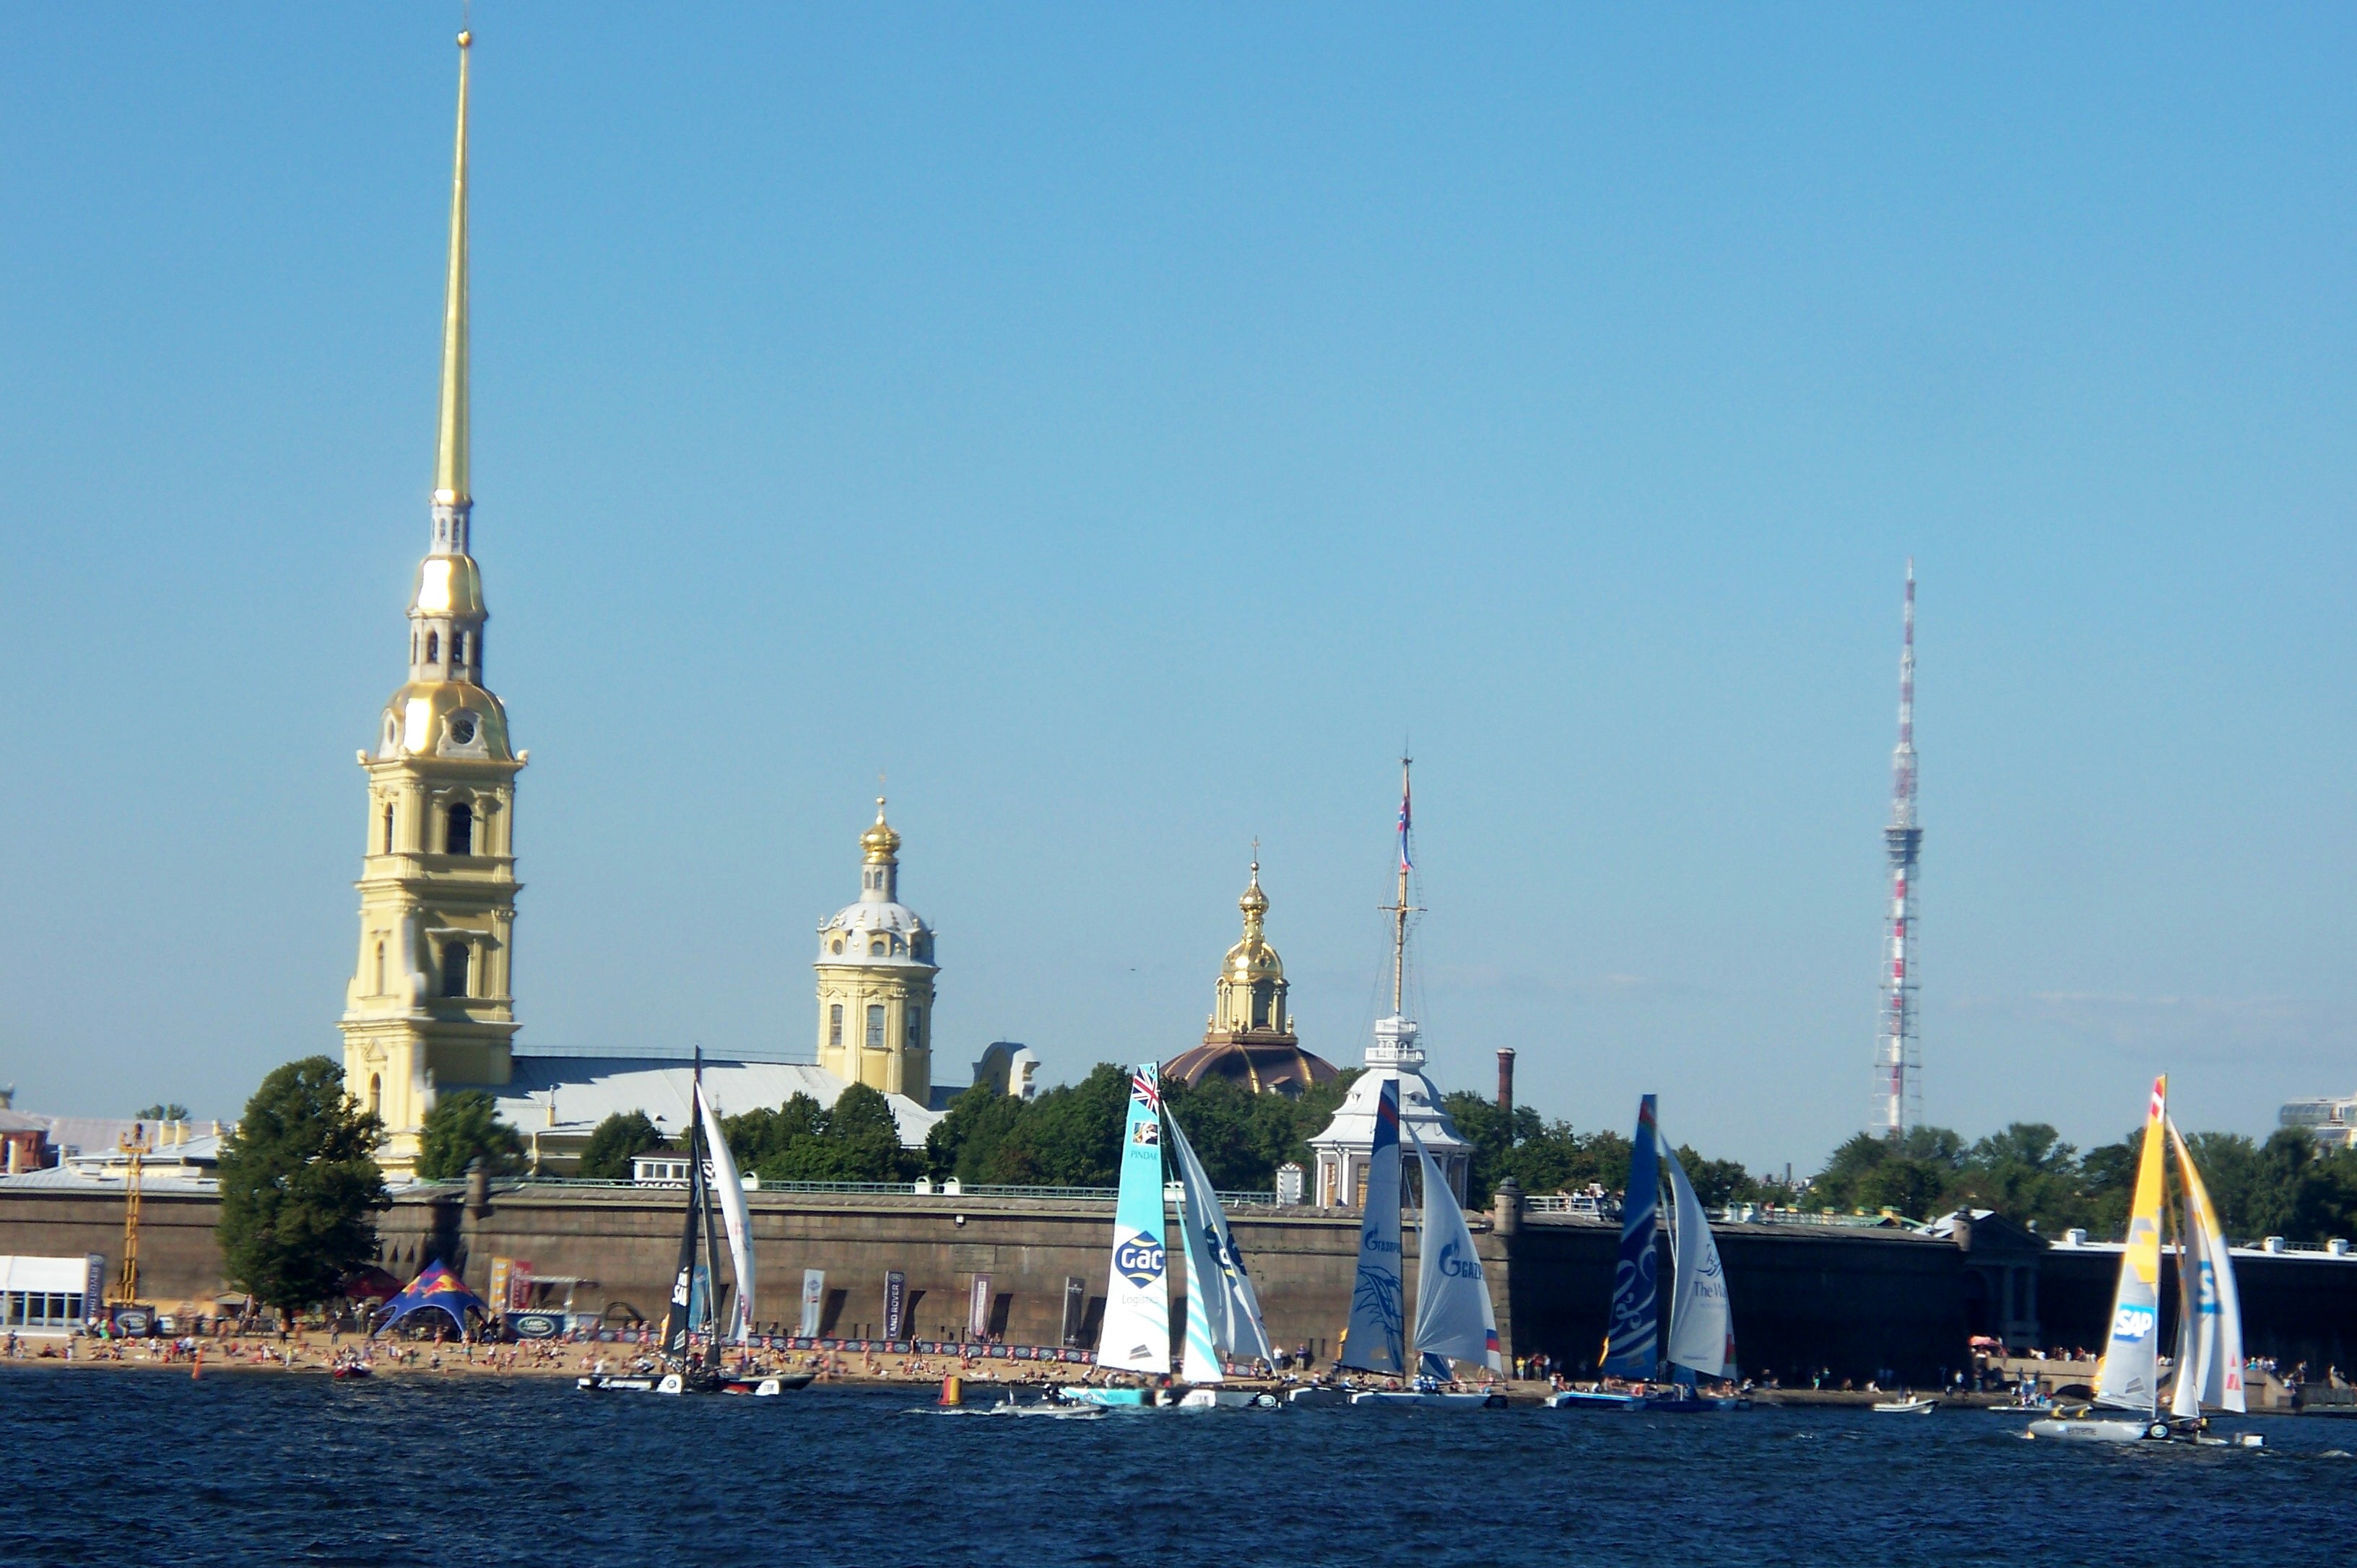 St. Petersburg, Russia